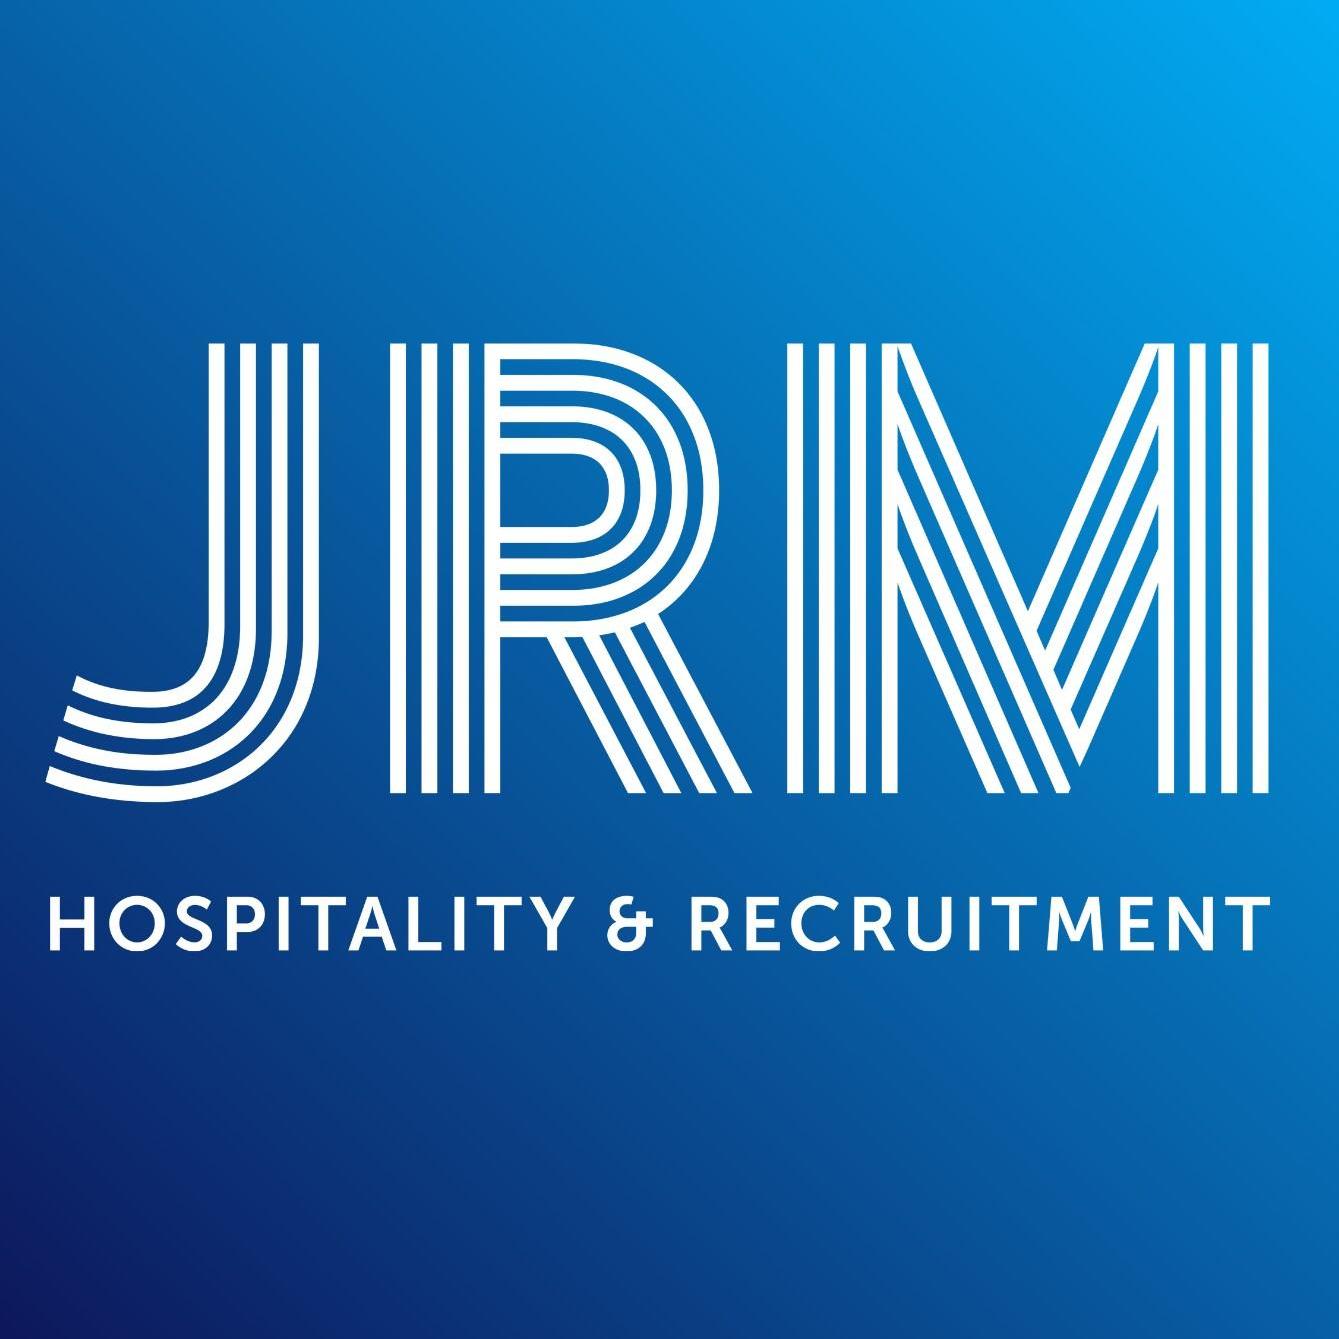 JRM Hospitality